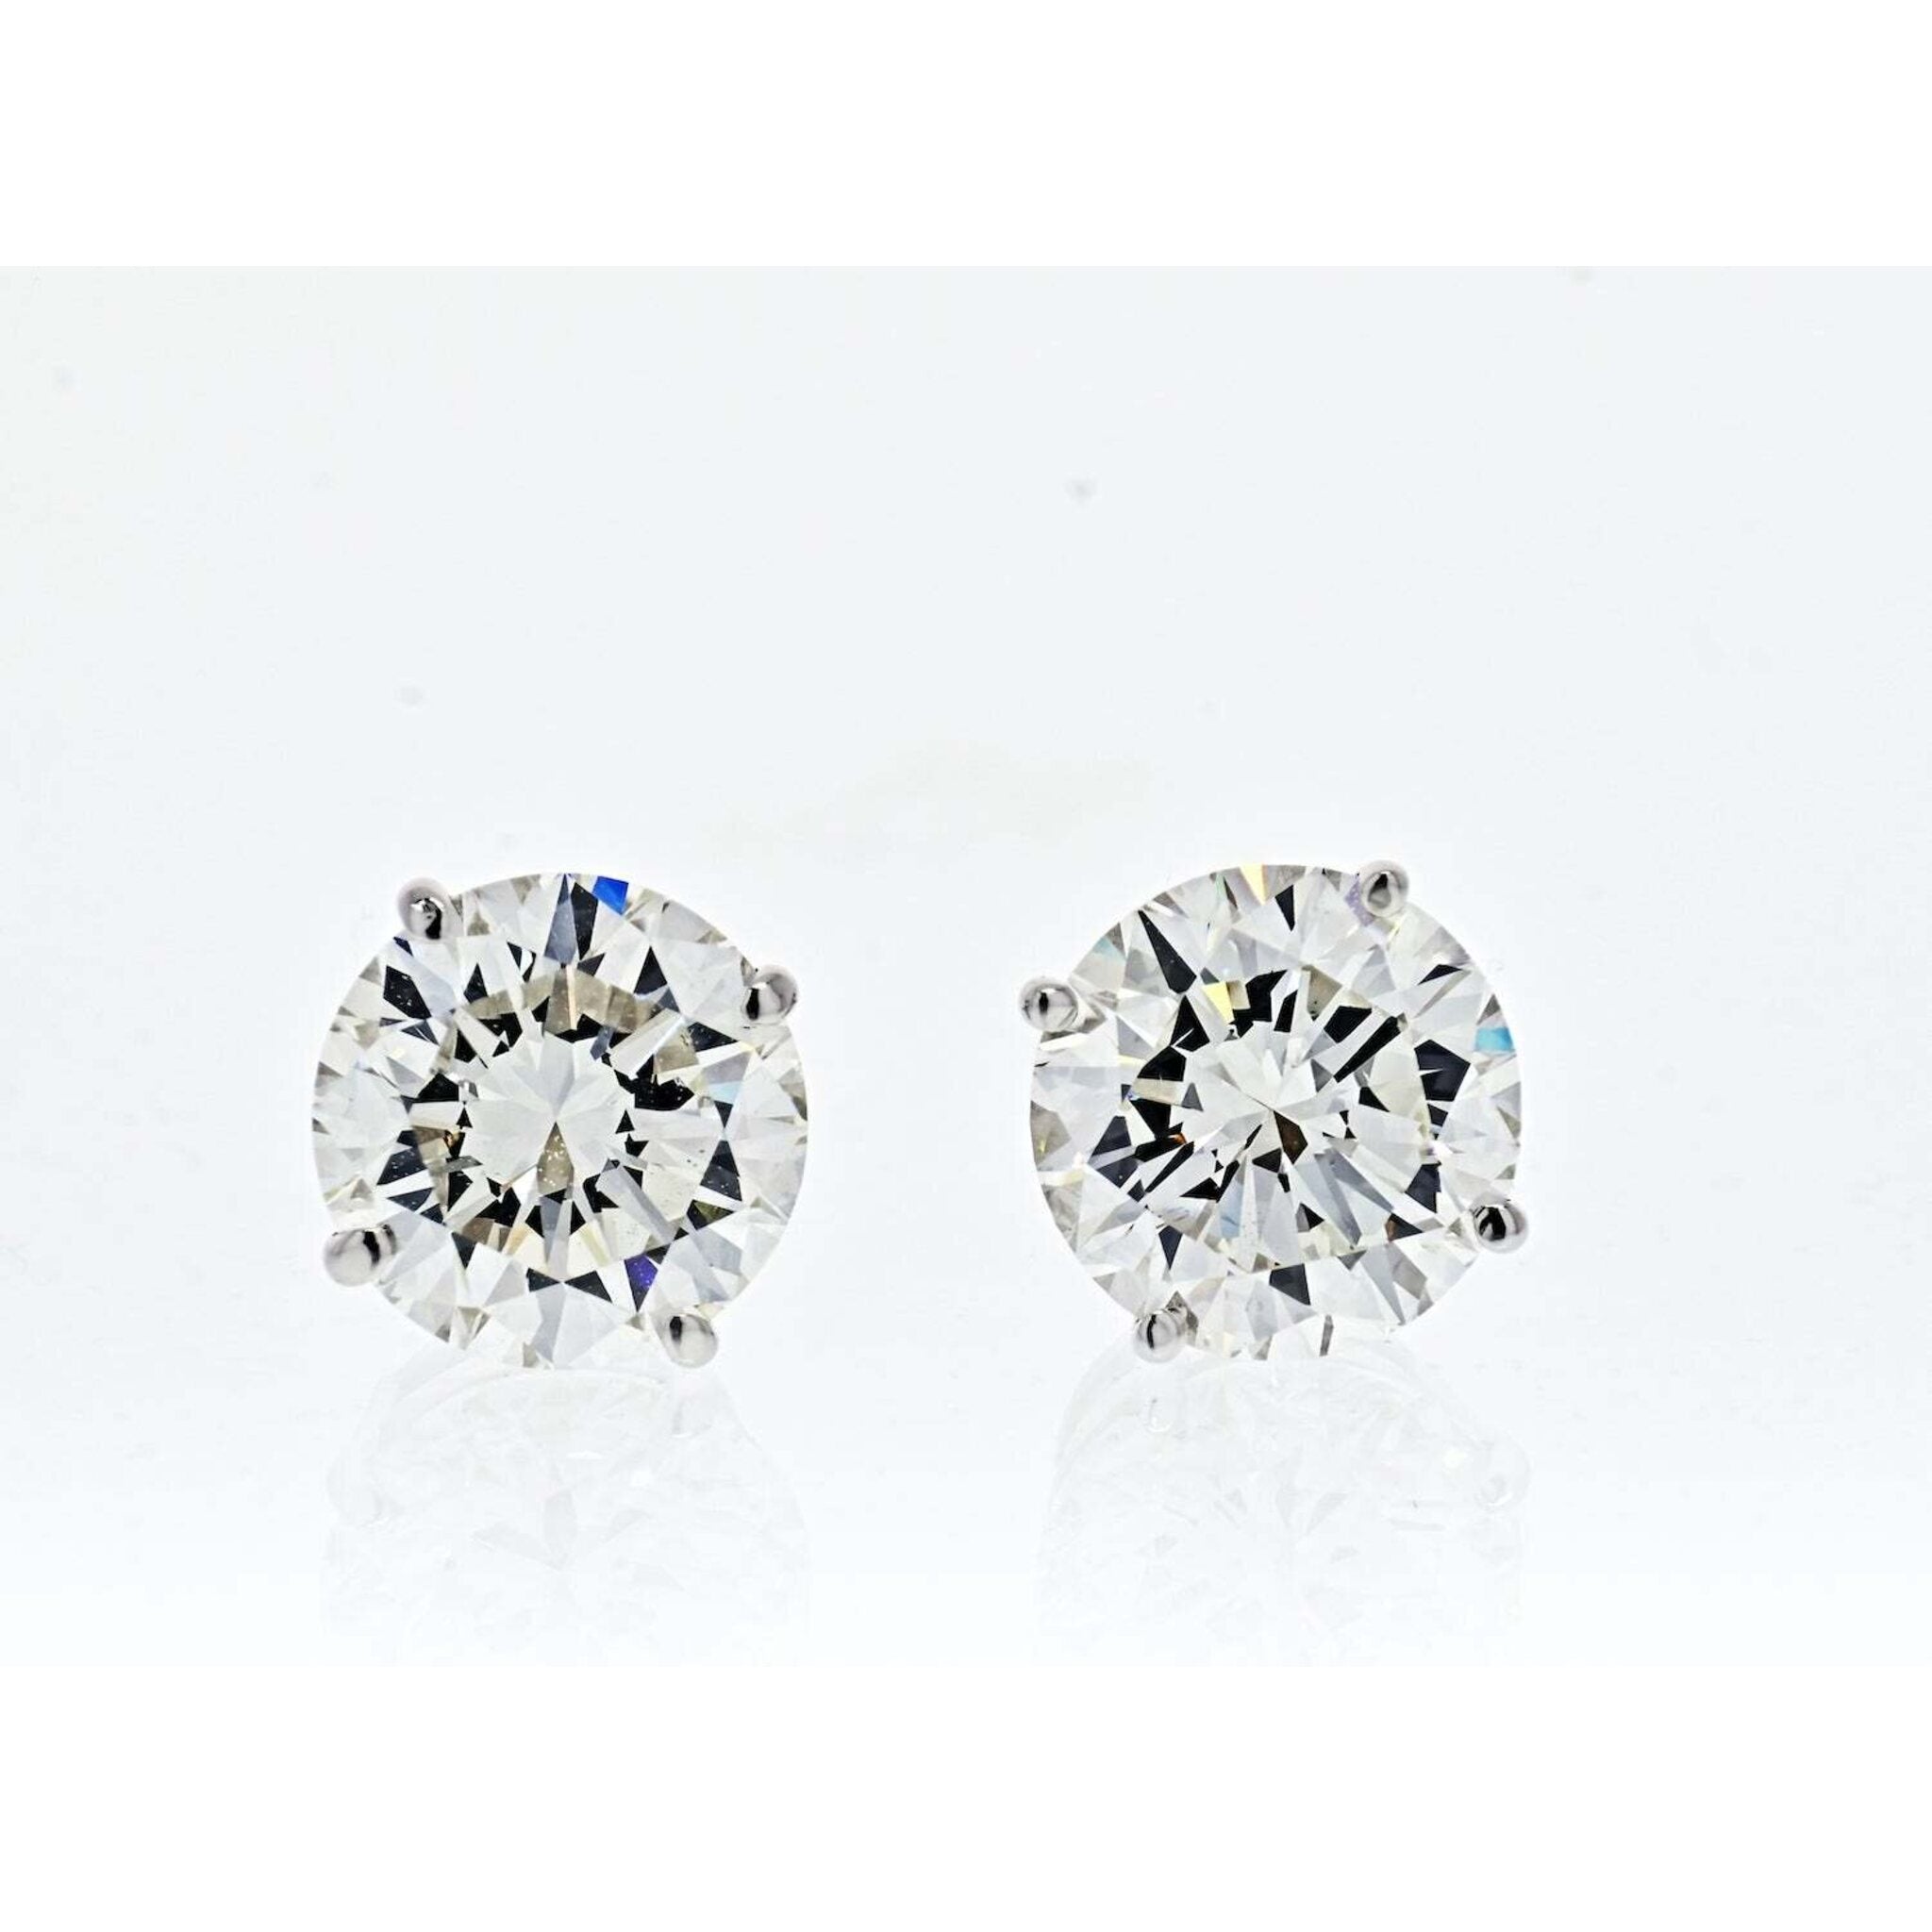 4.03 Carat Total Weight Round Diamond Stud Earrings (I, VS2, GIA)